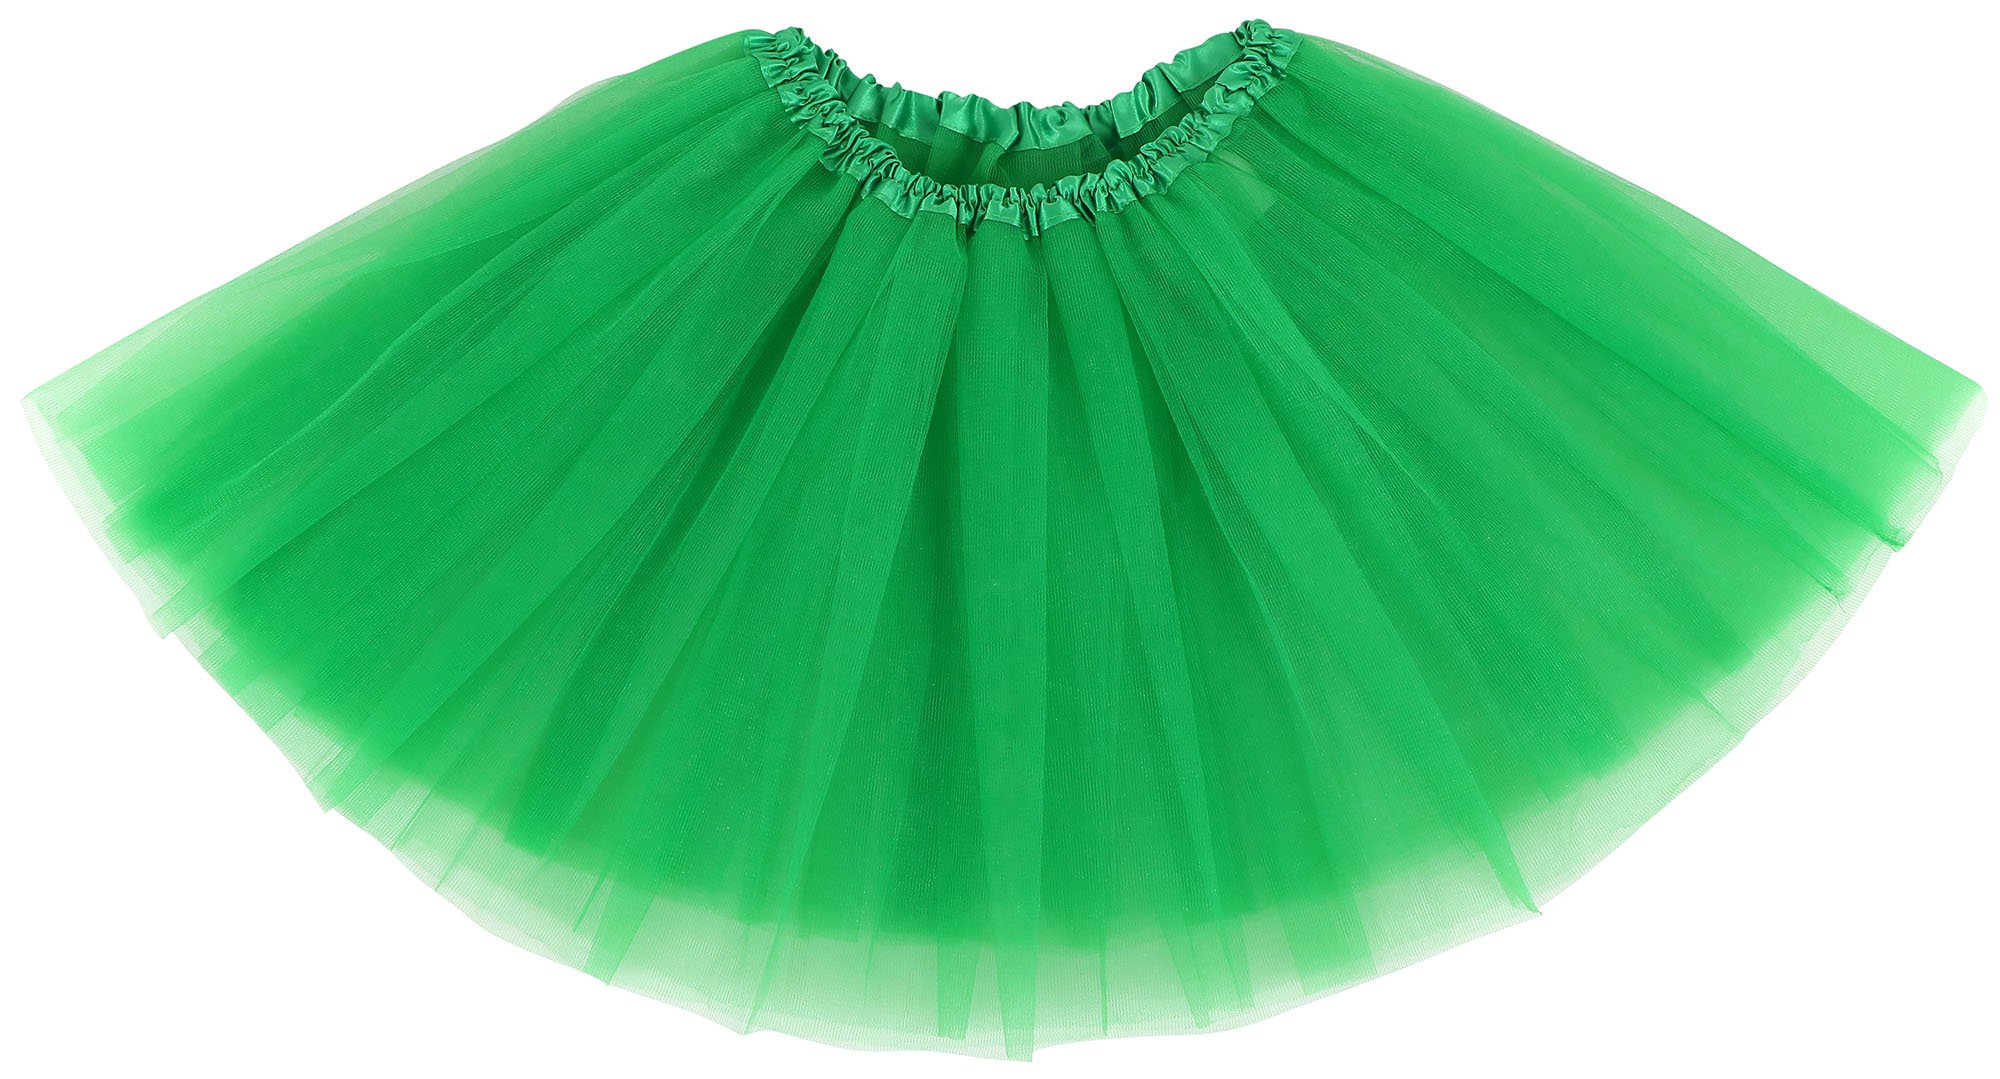 Simplicity Women's Adult Classic Elastic 3 Layered Tulle Tutu Skirt, Dark Green